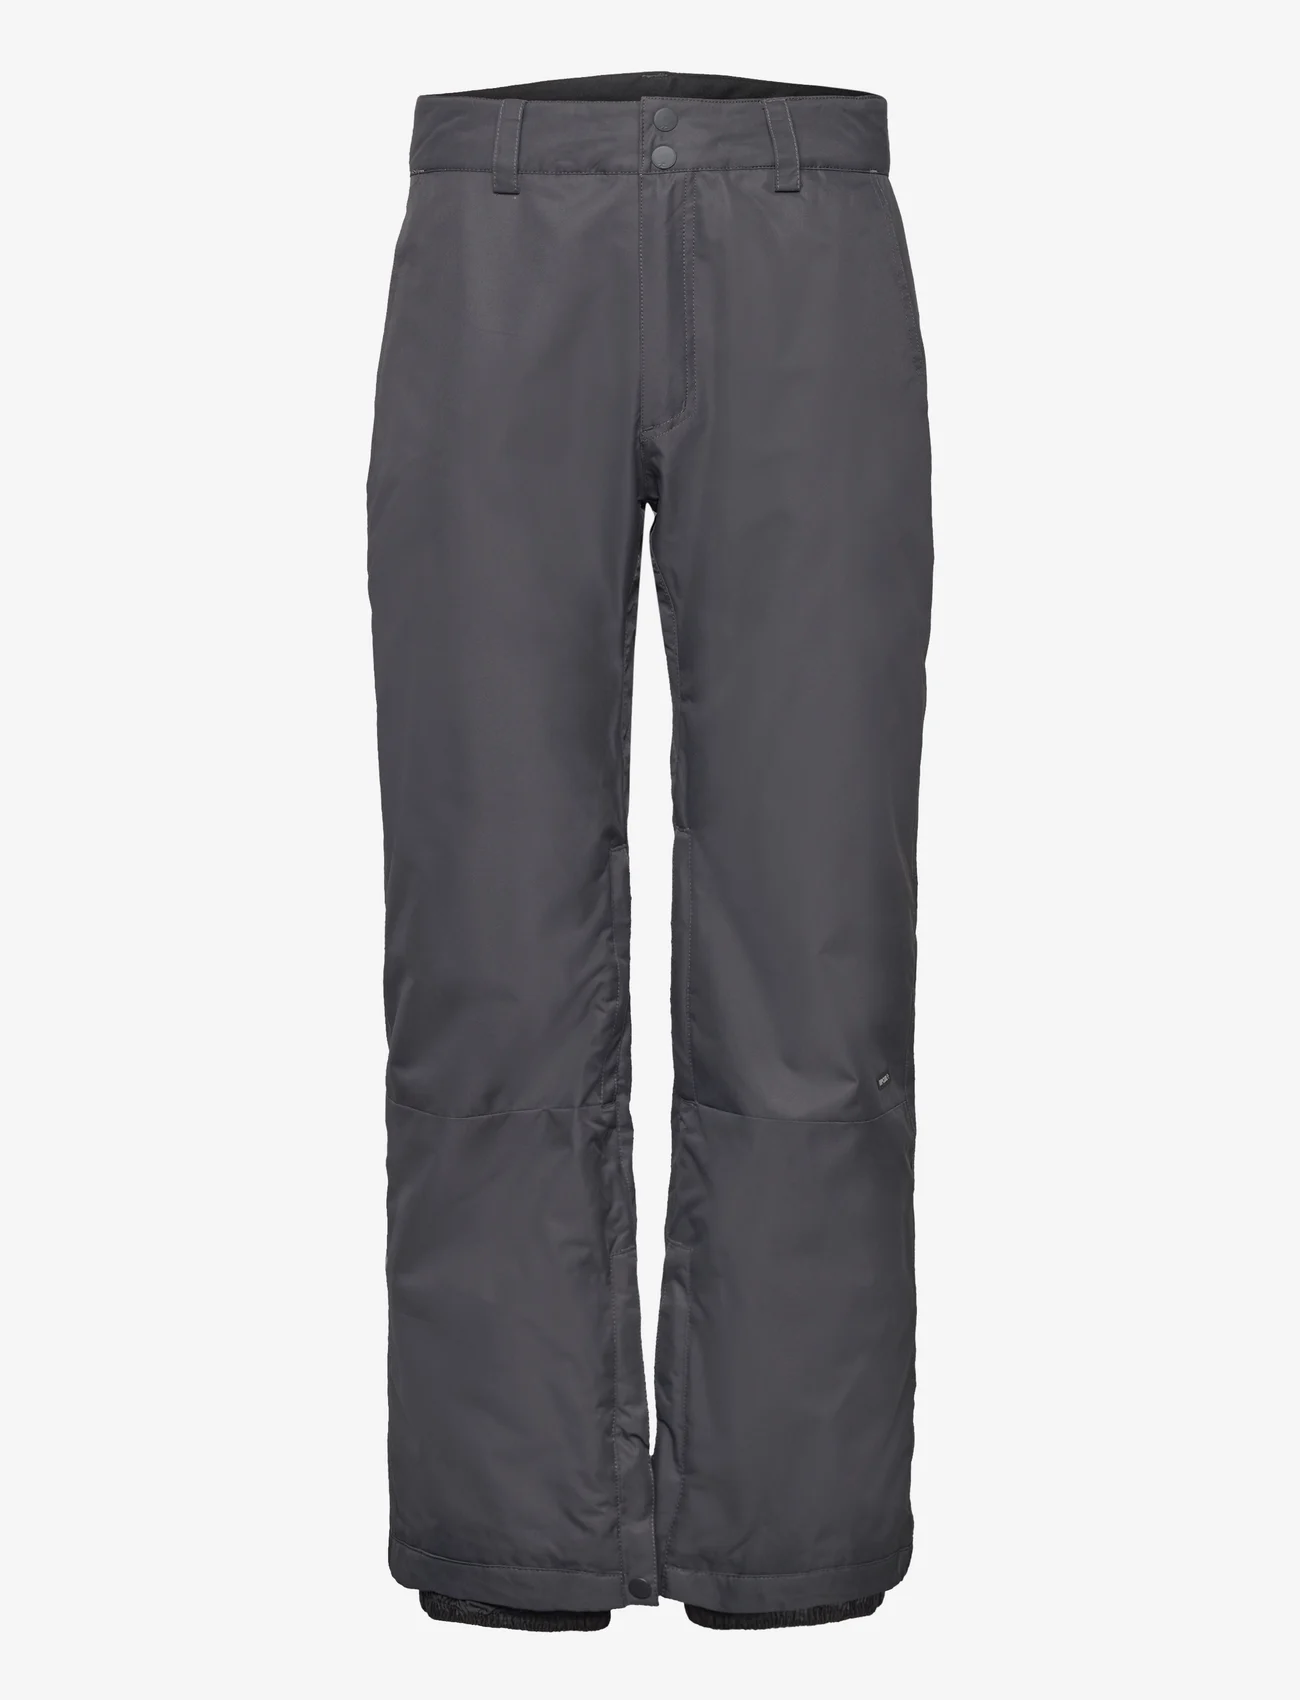 Rip Curl - BASE 10K/10K PANT - sports pants - black - 0